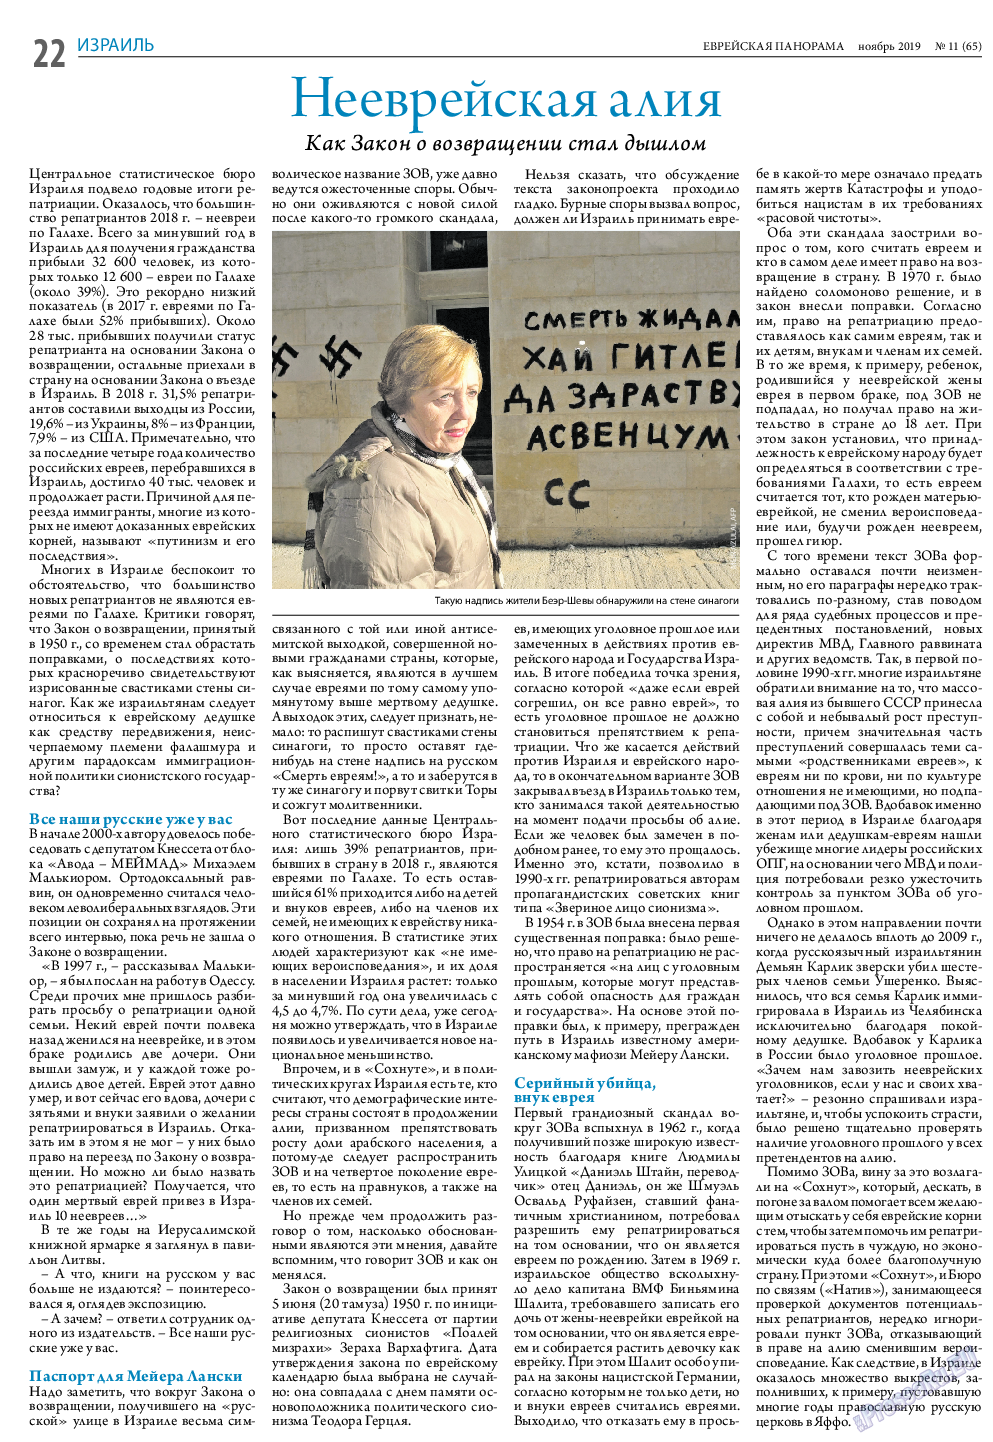 Еврейская панорама, газета. 2019 №11 стр.22